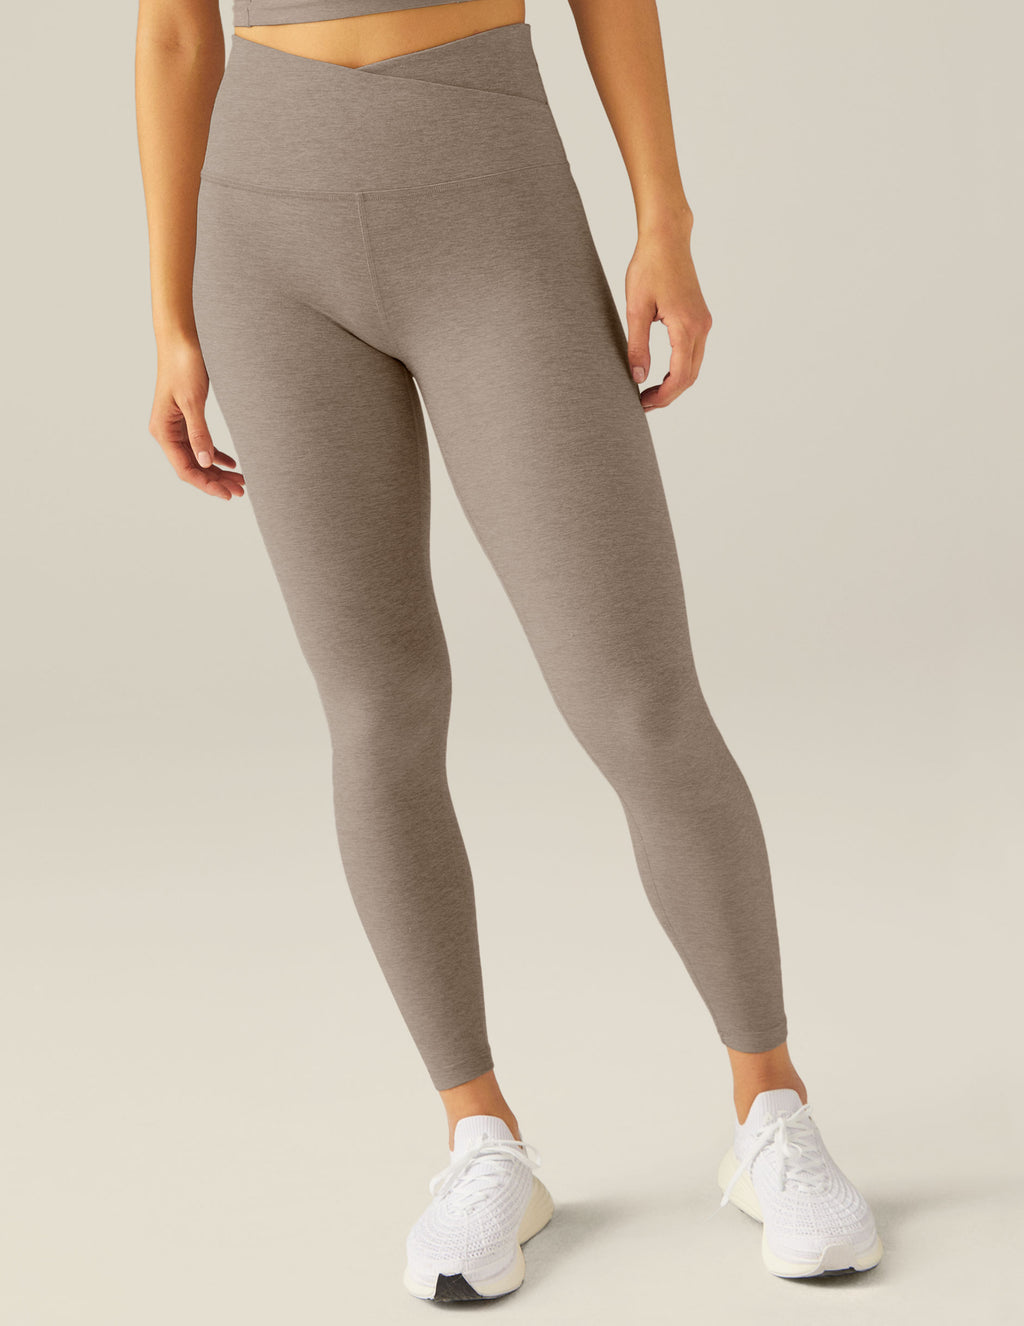 Cathalem Yoga Pants Short Length Women Leggings Yoga Fitness Printed  Running Pants Double Couple High Waist Yoga Pants Pants Blue 3X-Large 